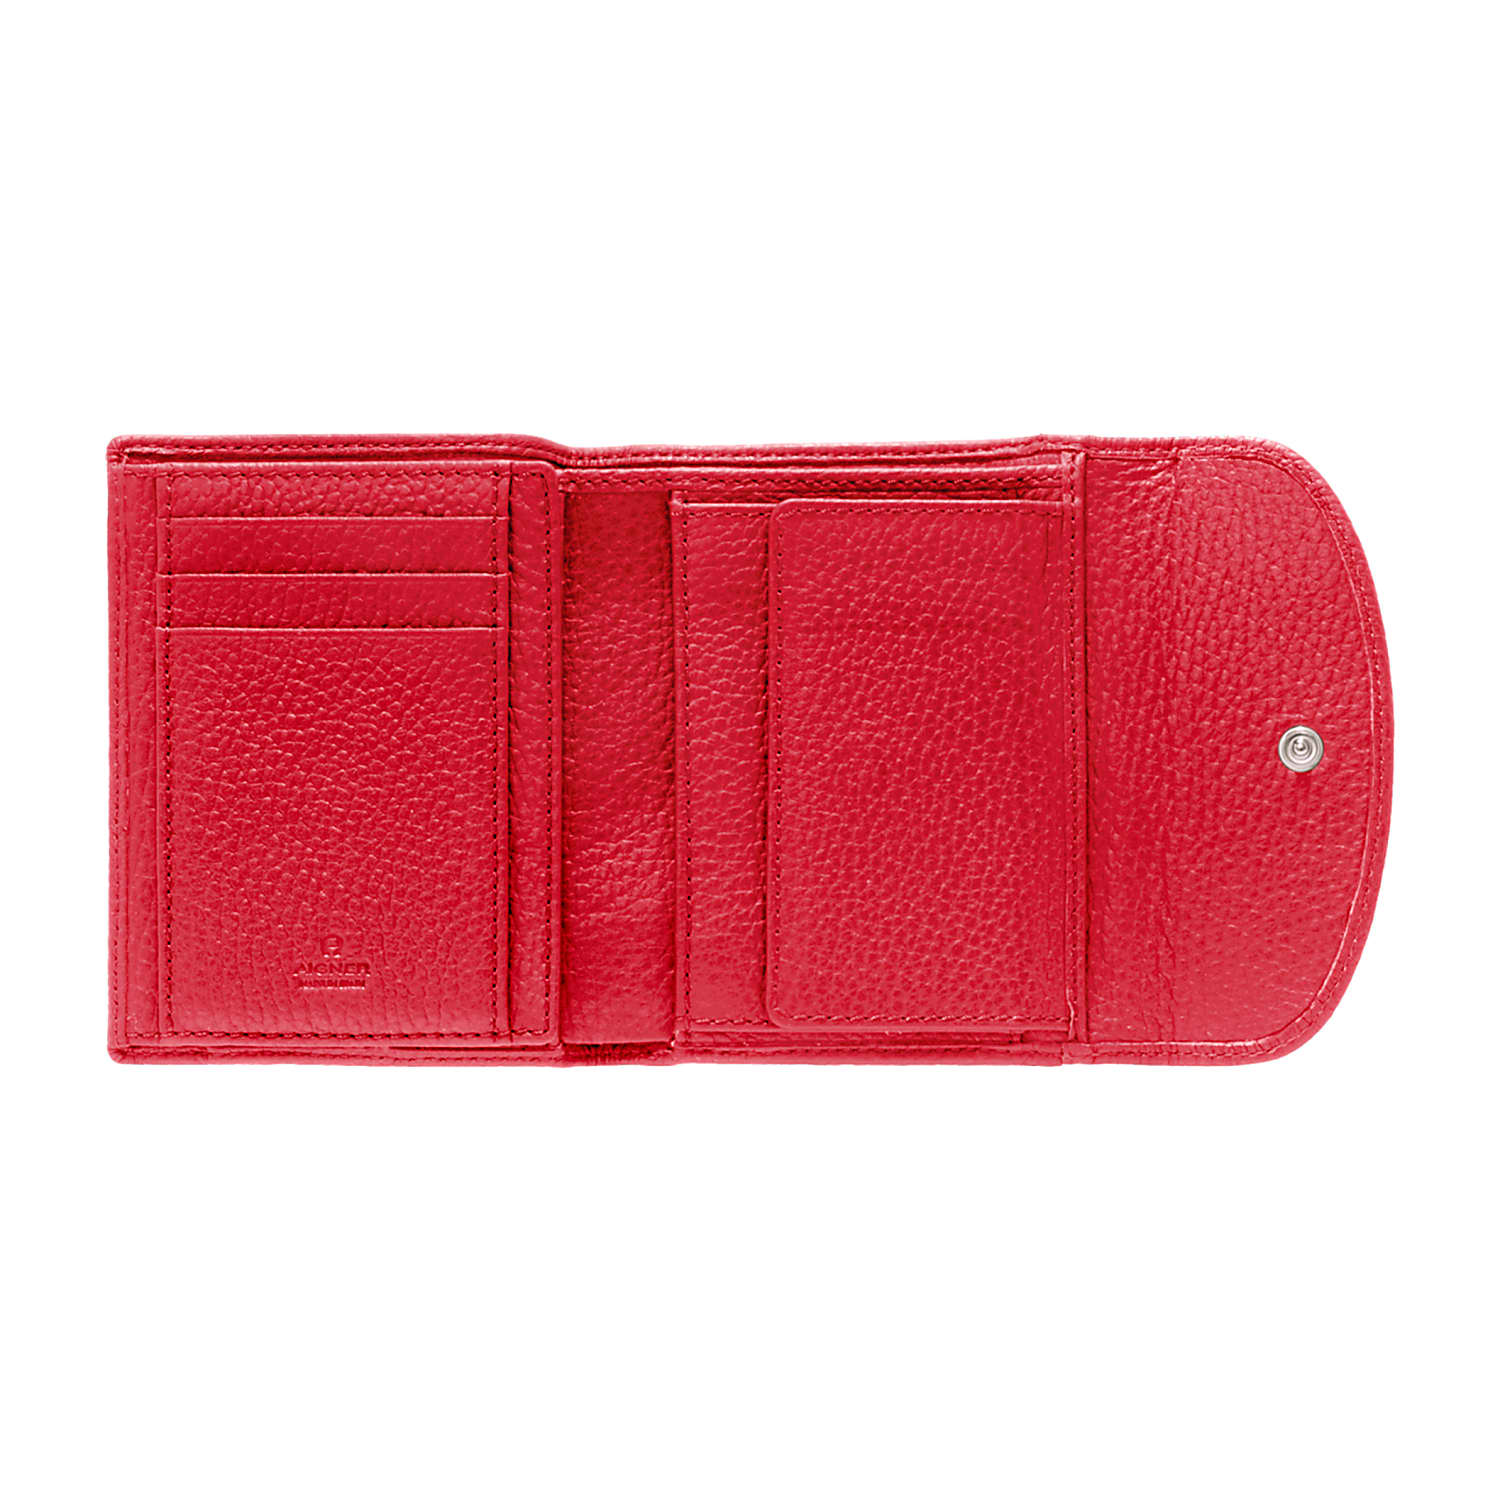 Basics Combination wallet